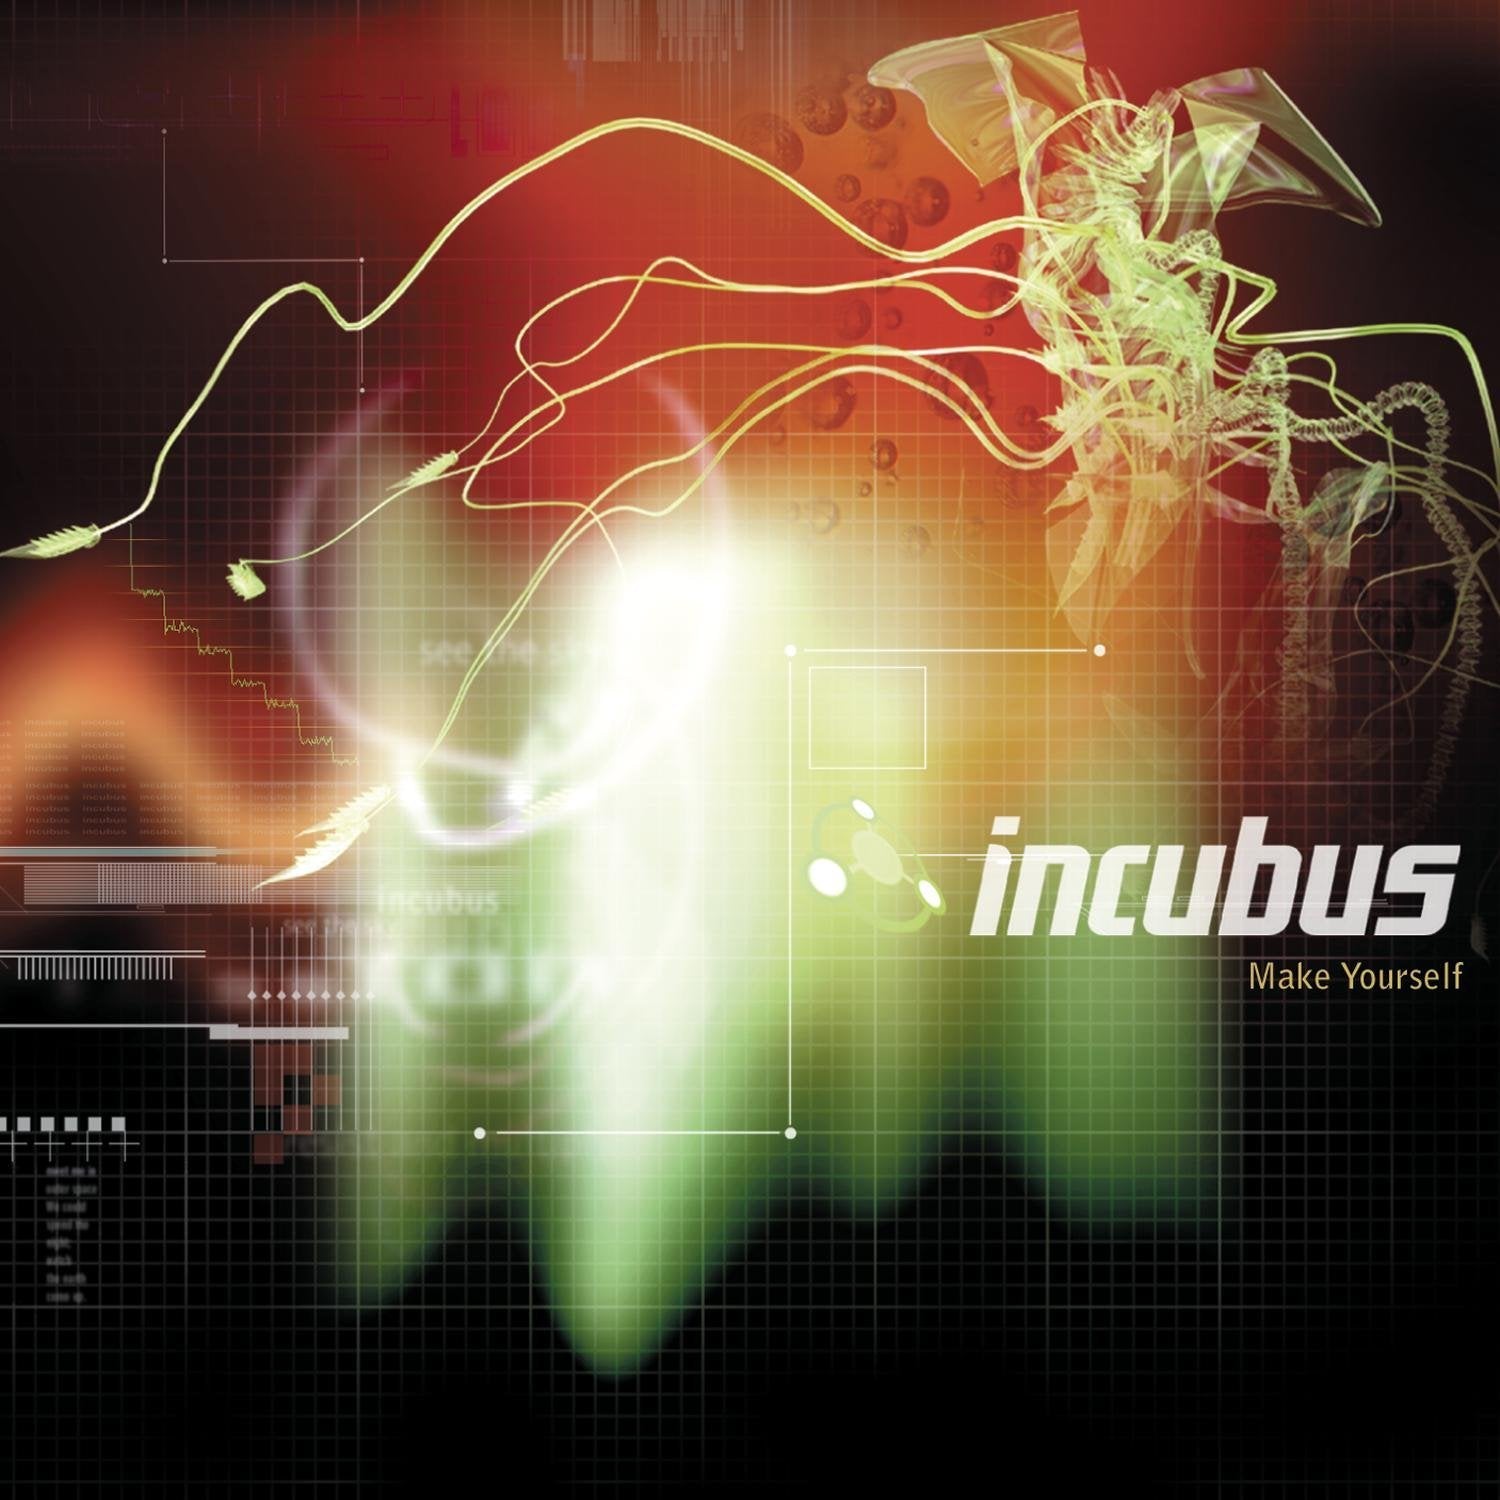 Incubus "Make Yourself" Gatefold 2x12" Vinyl